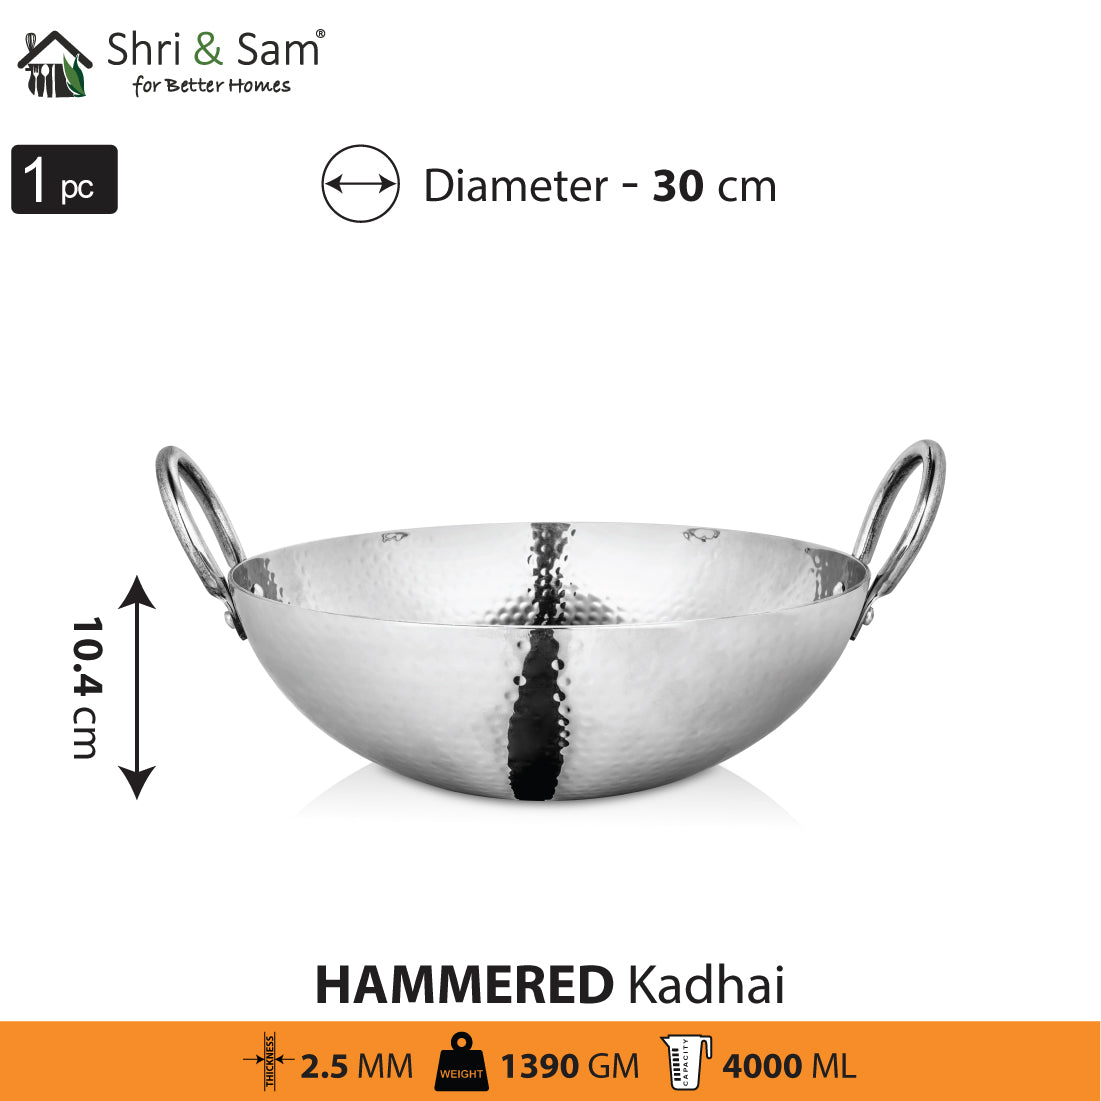 Stainless Steel Triply Deep Hammered Kadhai Pro